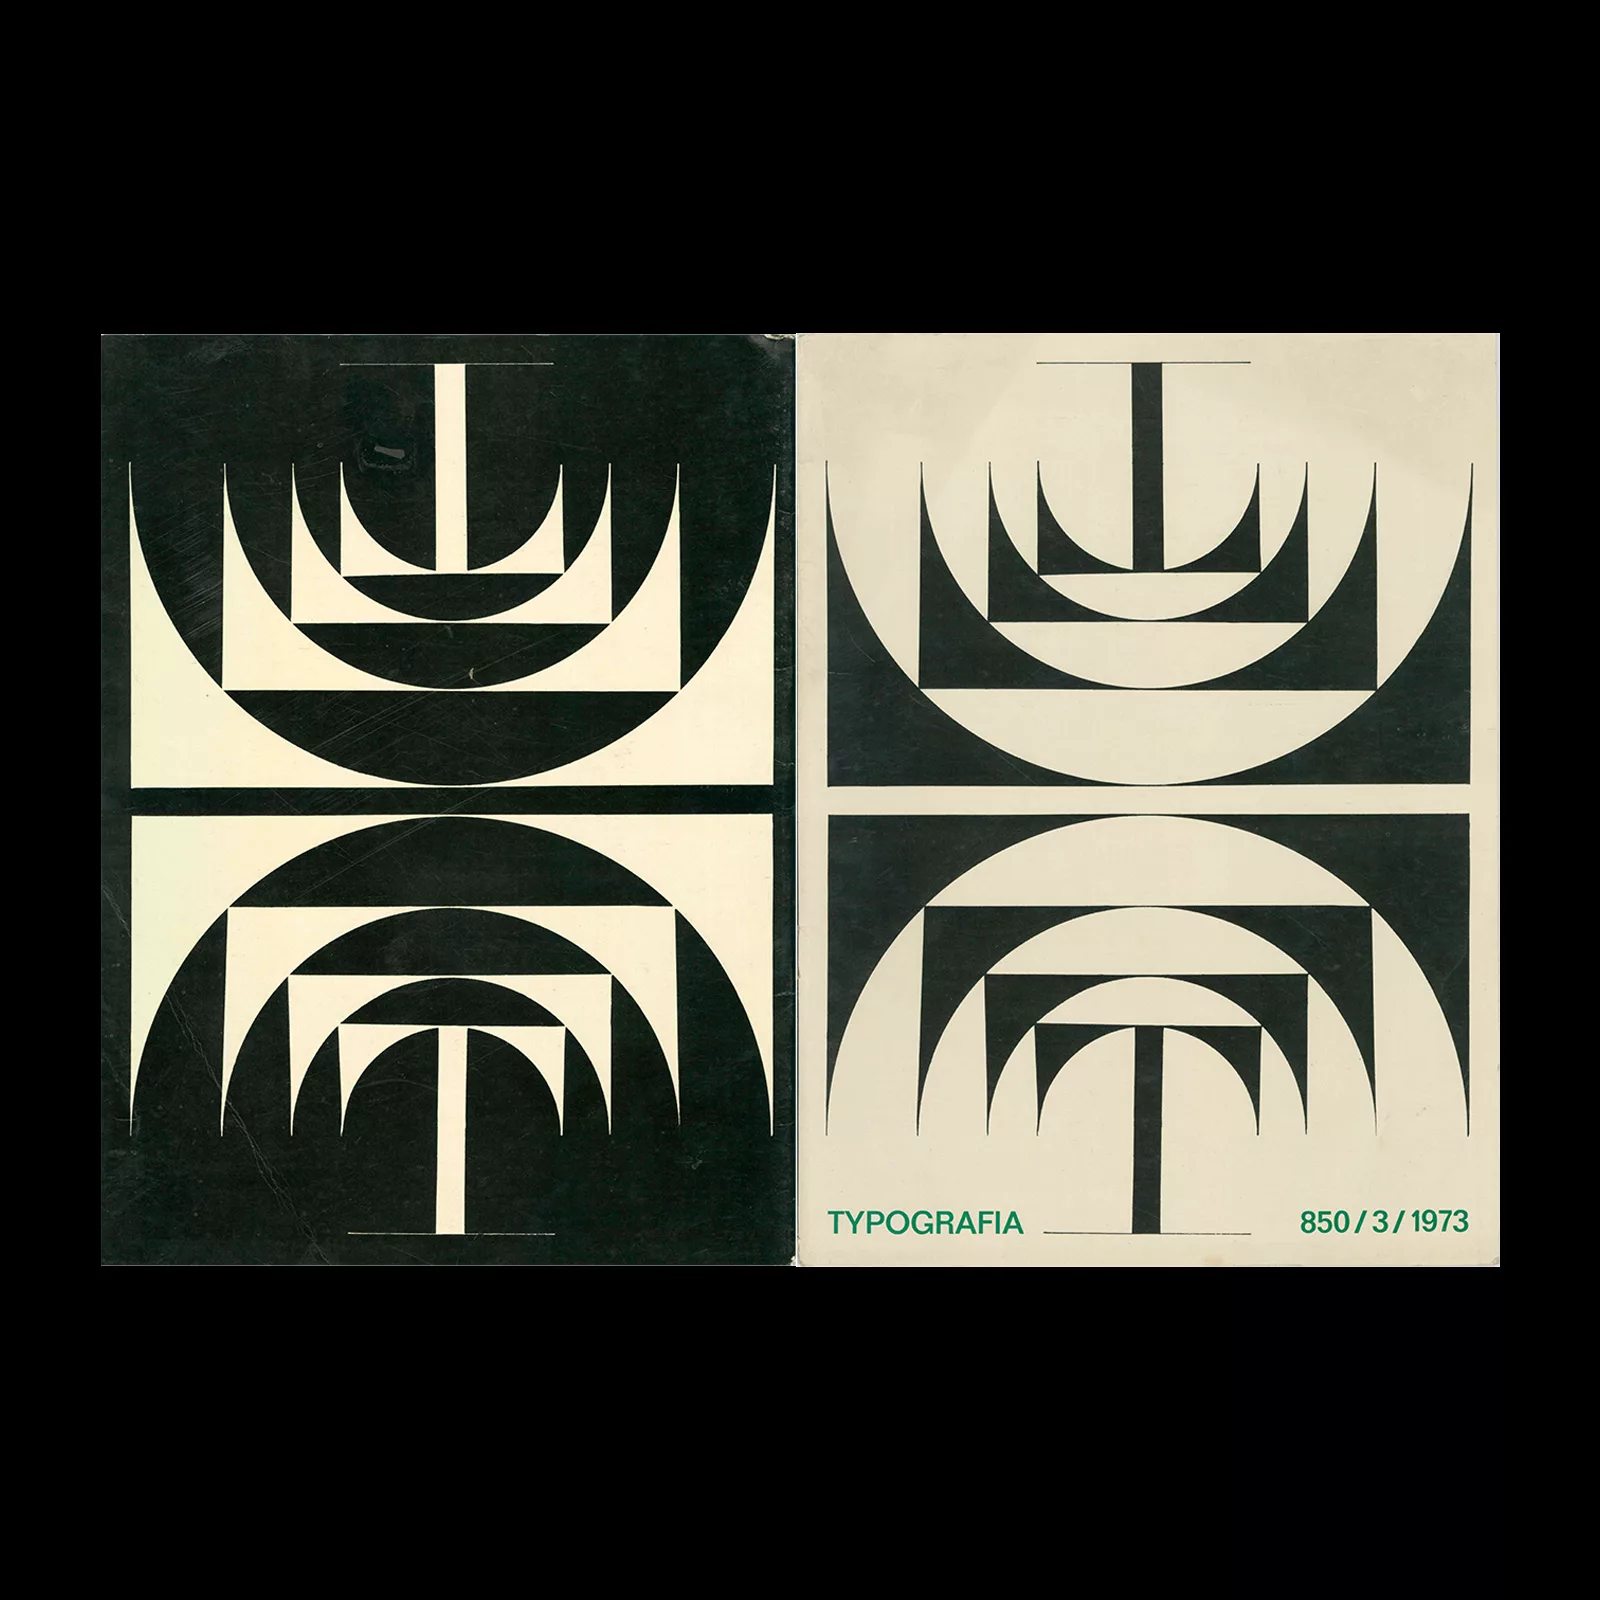 Typografia, ročník 76, 03, 1973. Cover design by Milan Jareš